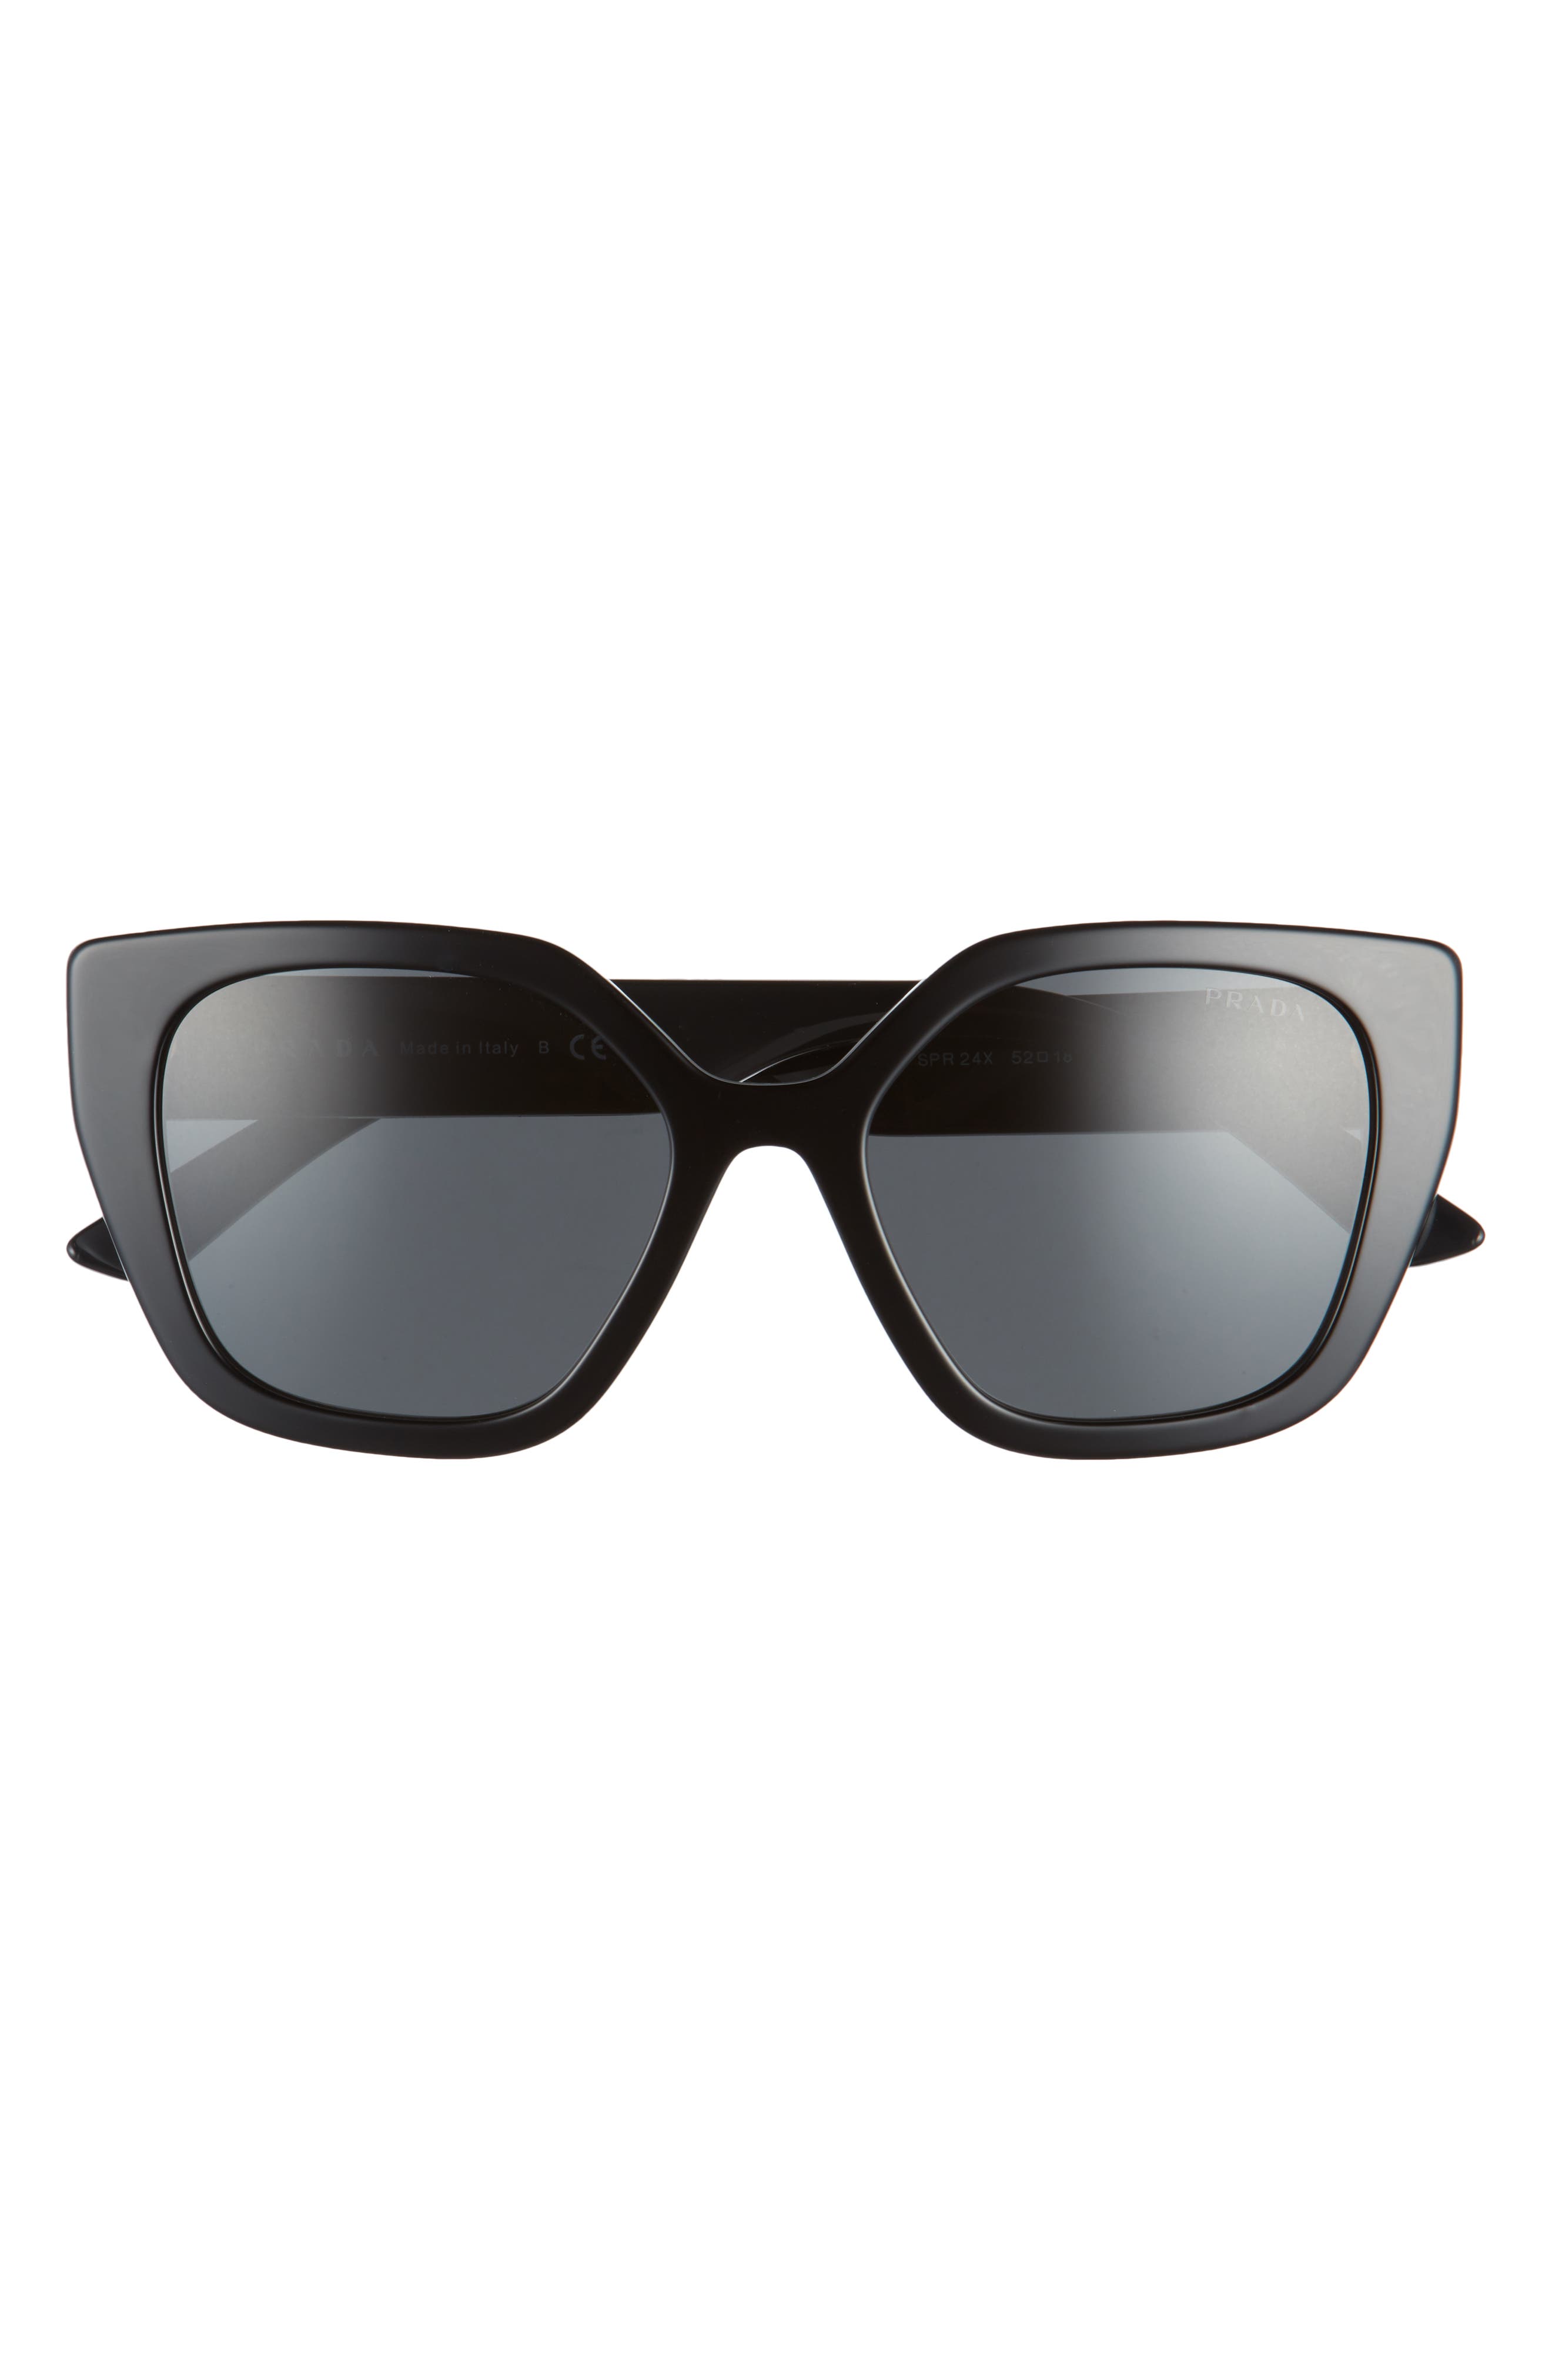 prada sunglasses | Nordstrom